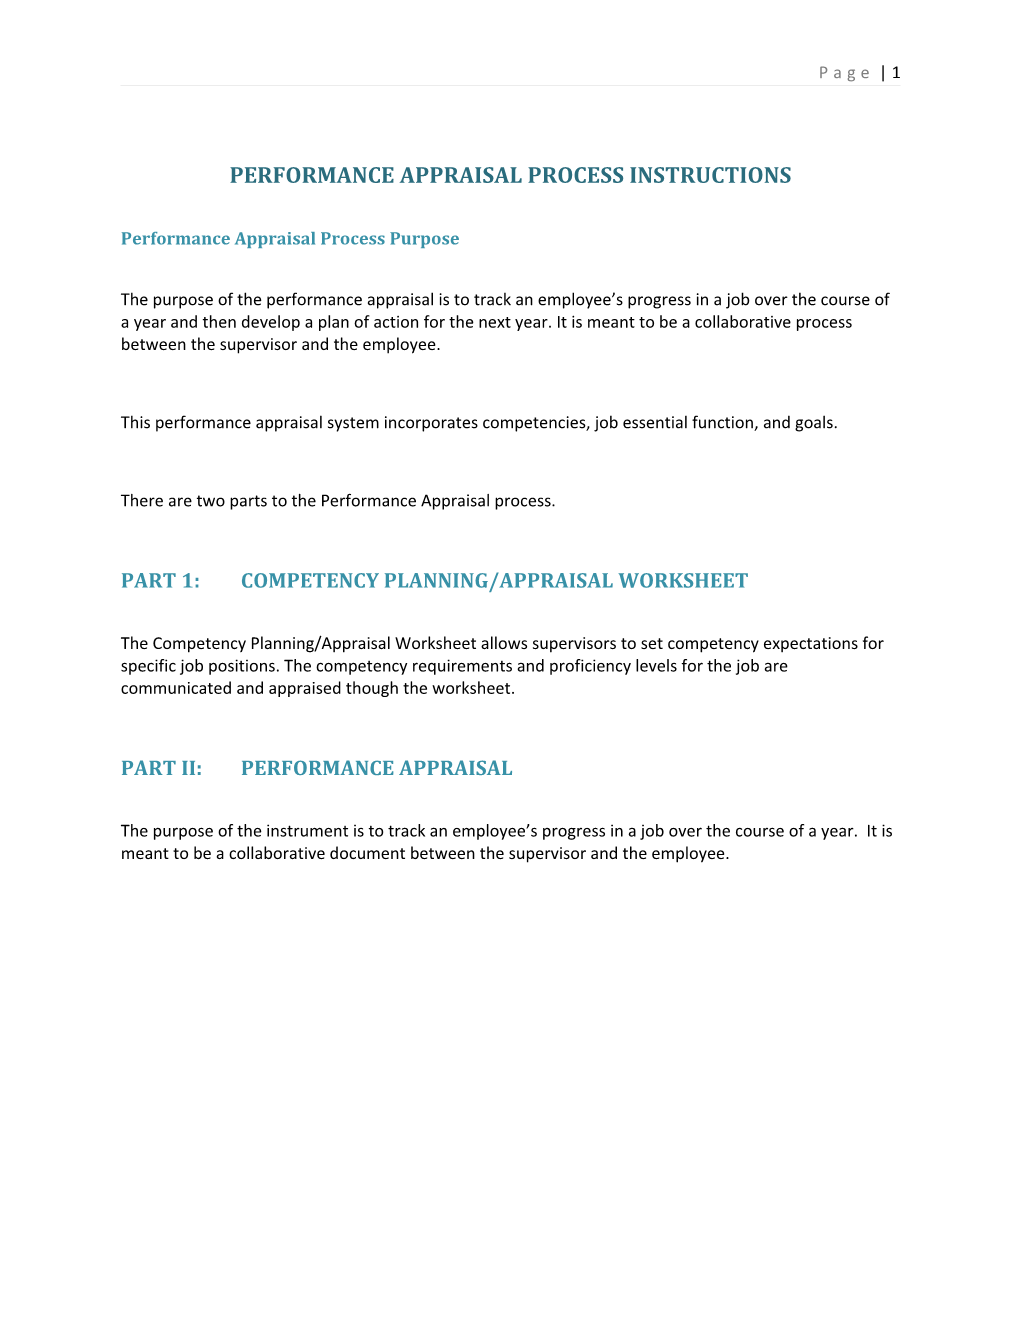 Performance Appraisal Process Instructions